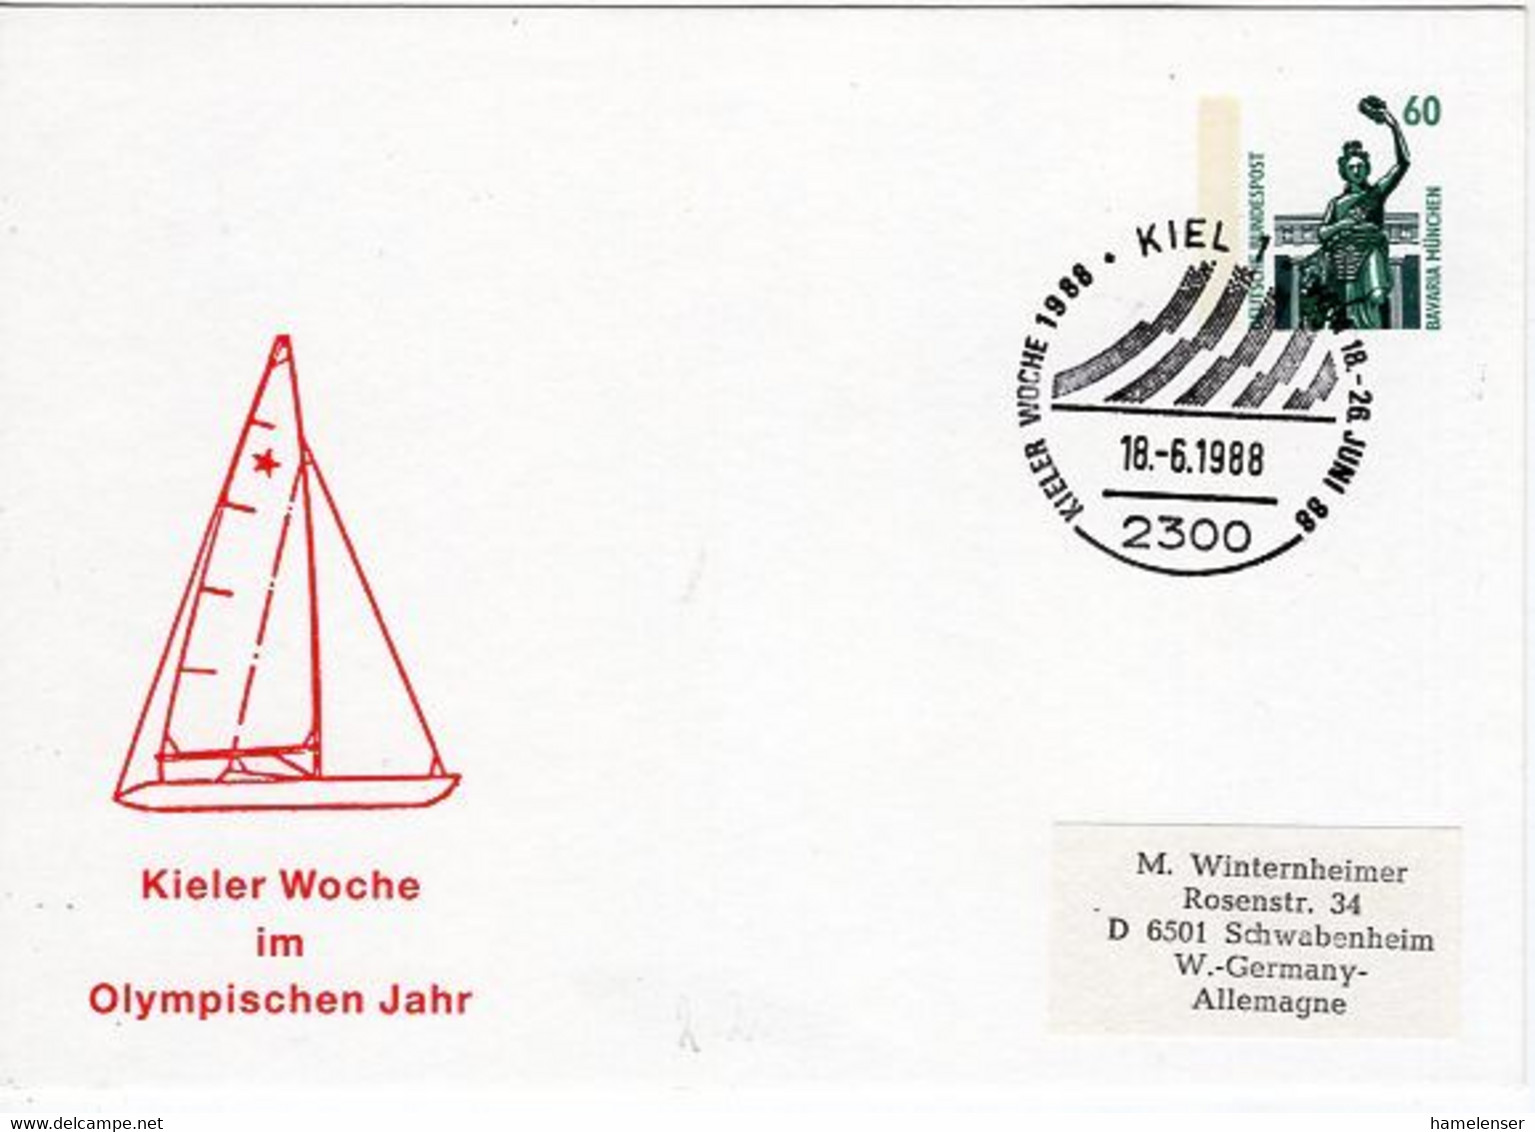 53704 - Bund - 1988 - 60Pfg SWK PGAKte "Kieler Woche" SoStpl KIEL - KIELER WOCHE -> Schwabenheim - Vela